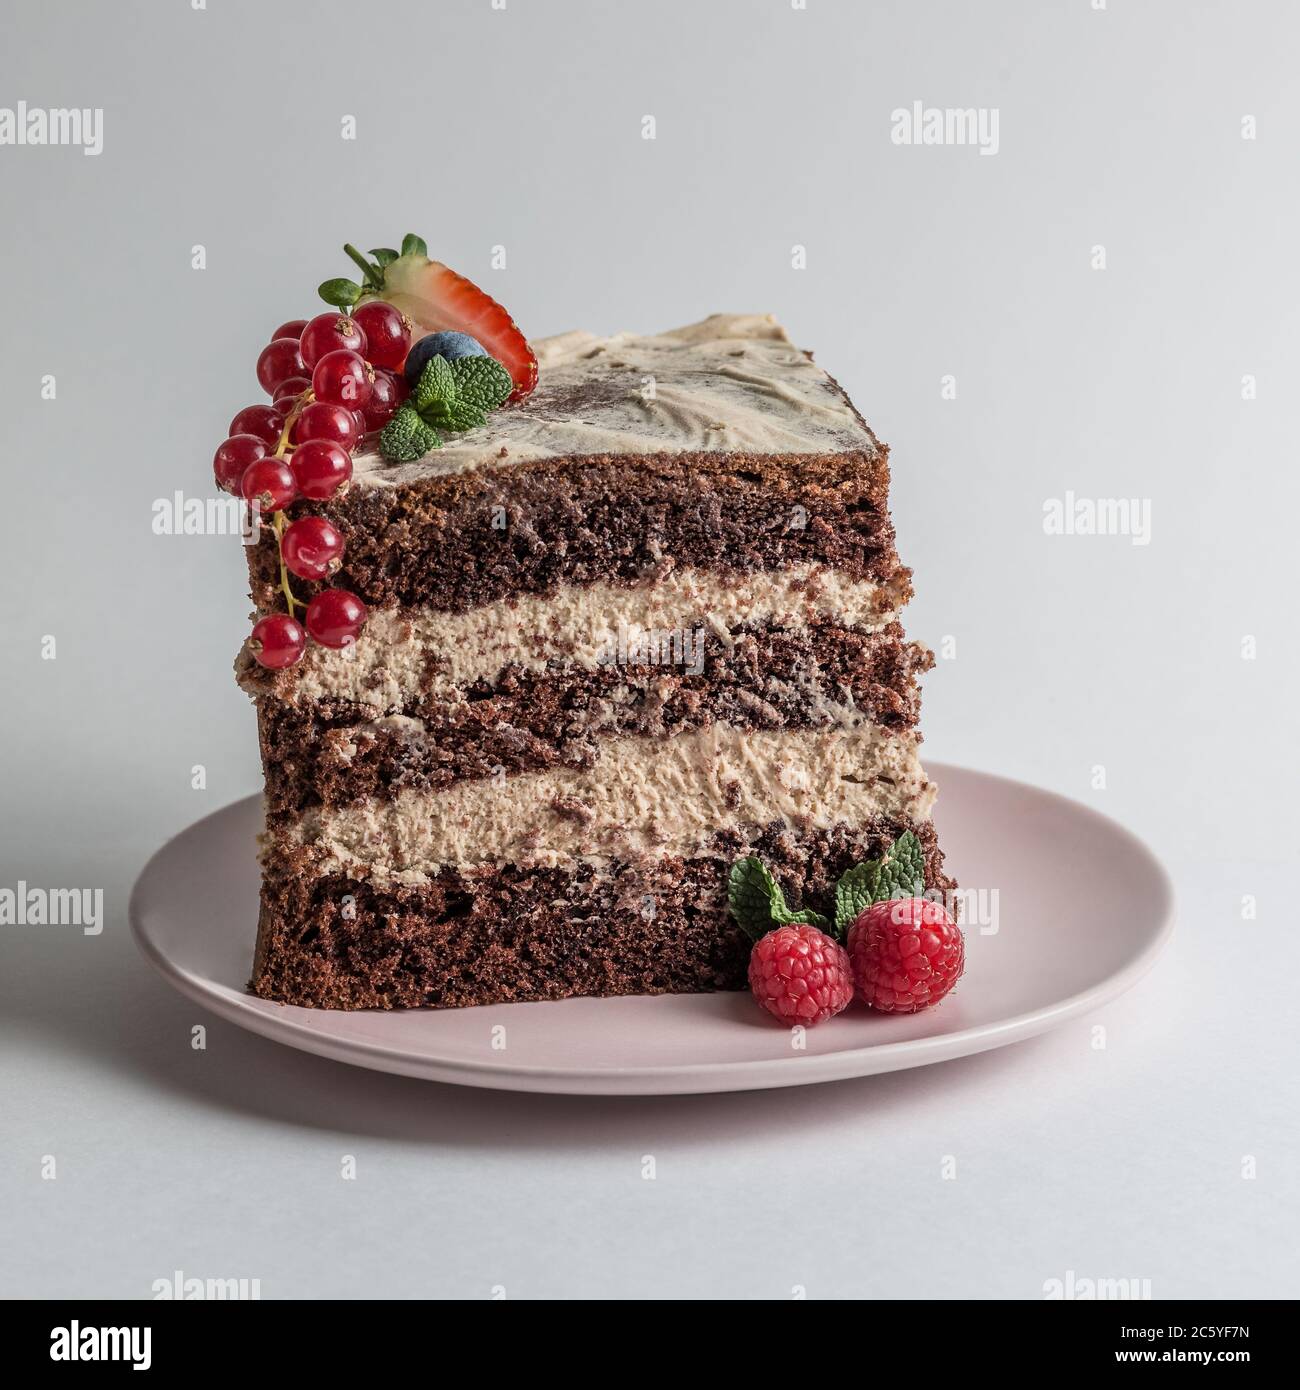 Delicious Red Velvet cake side view Stock Photo | Adobe Stock